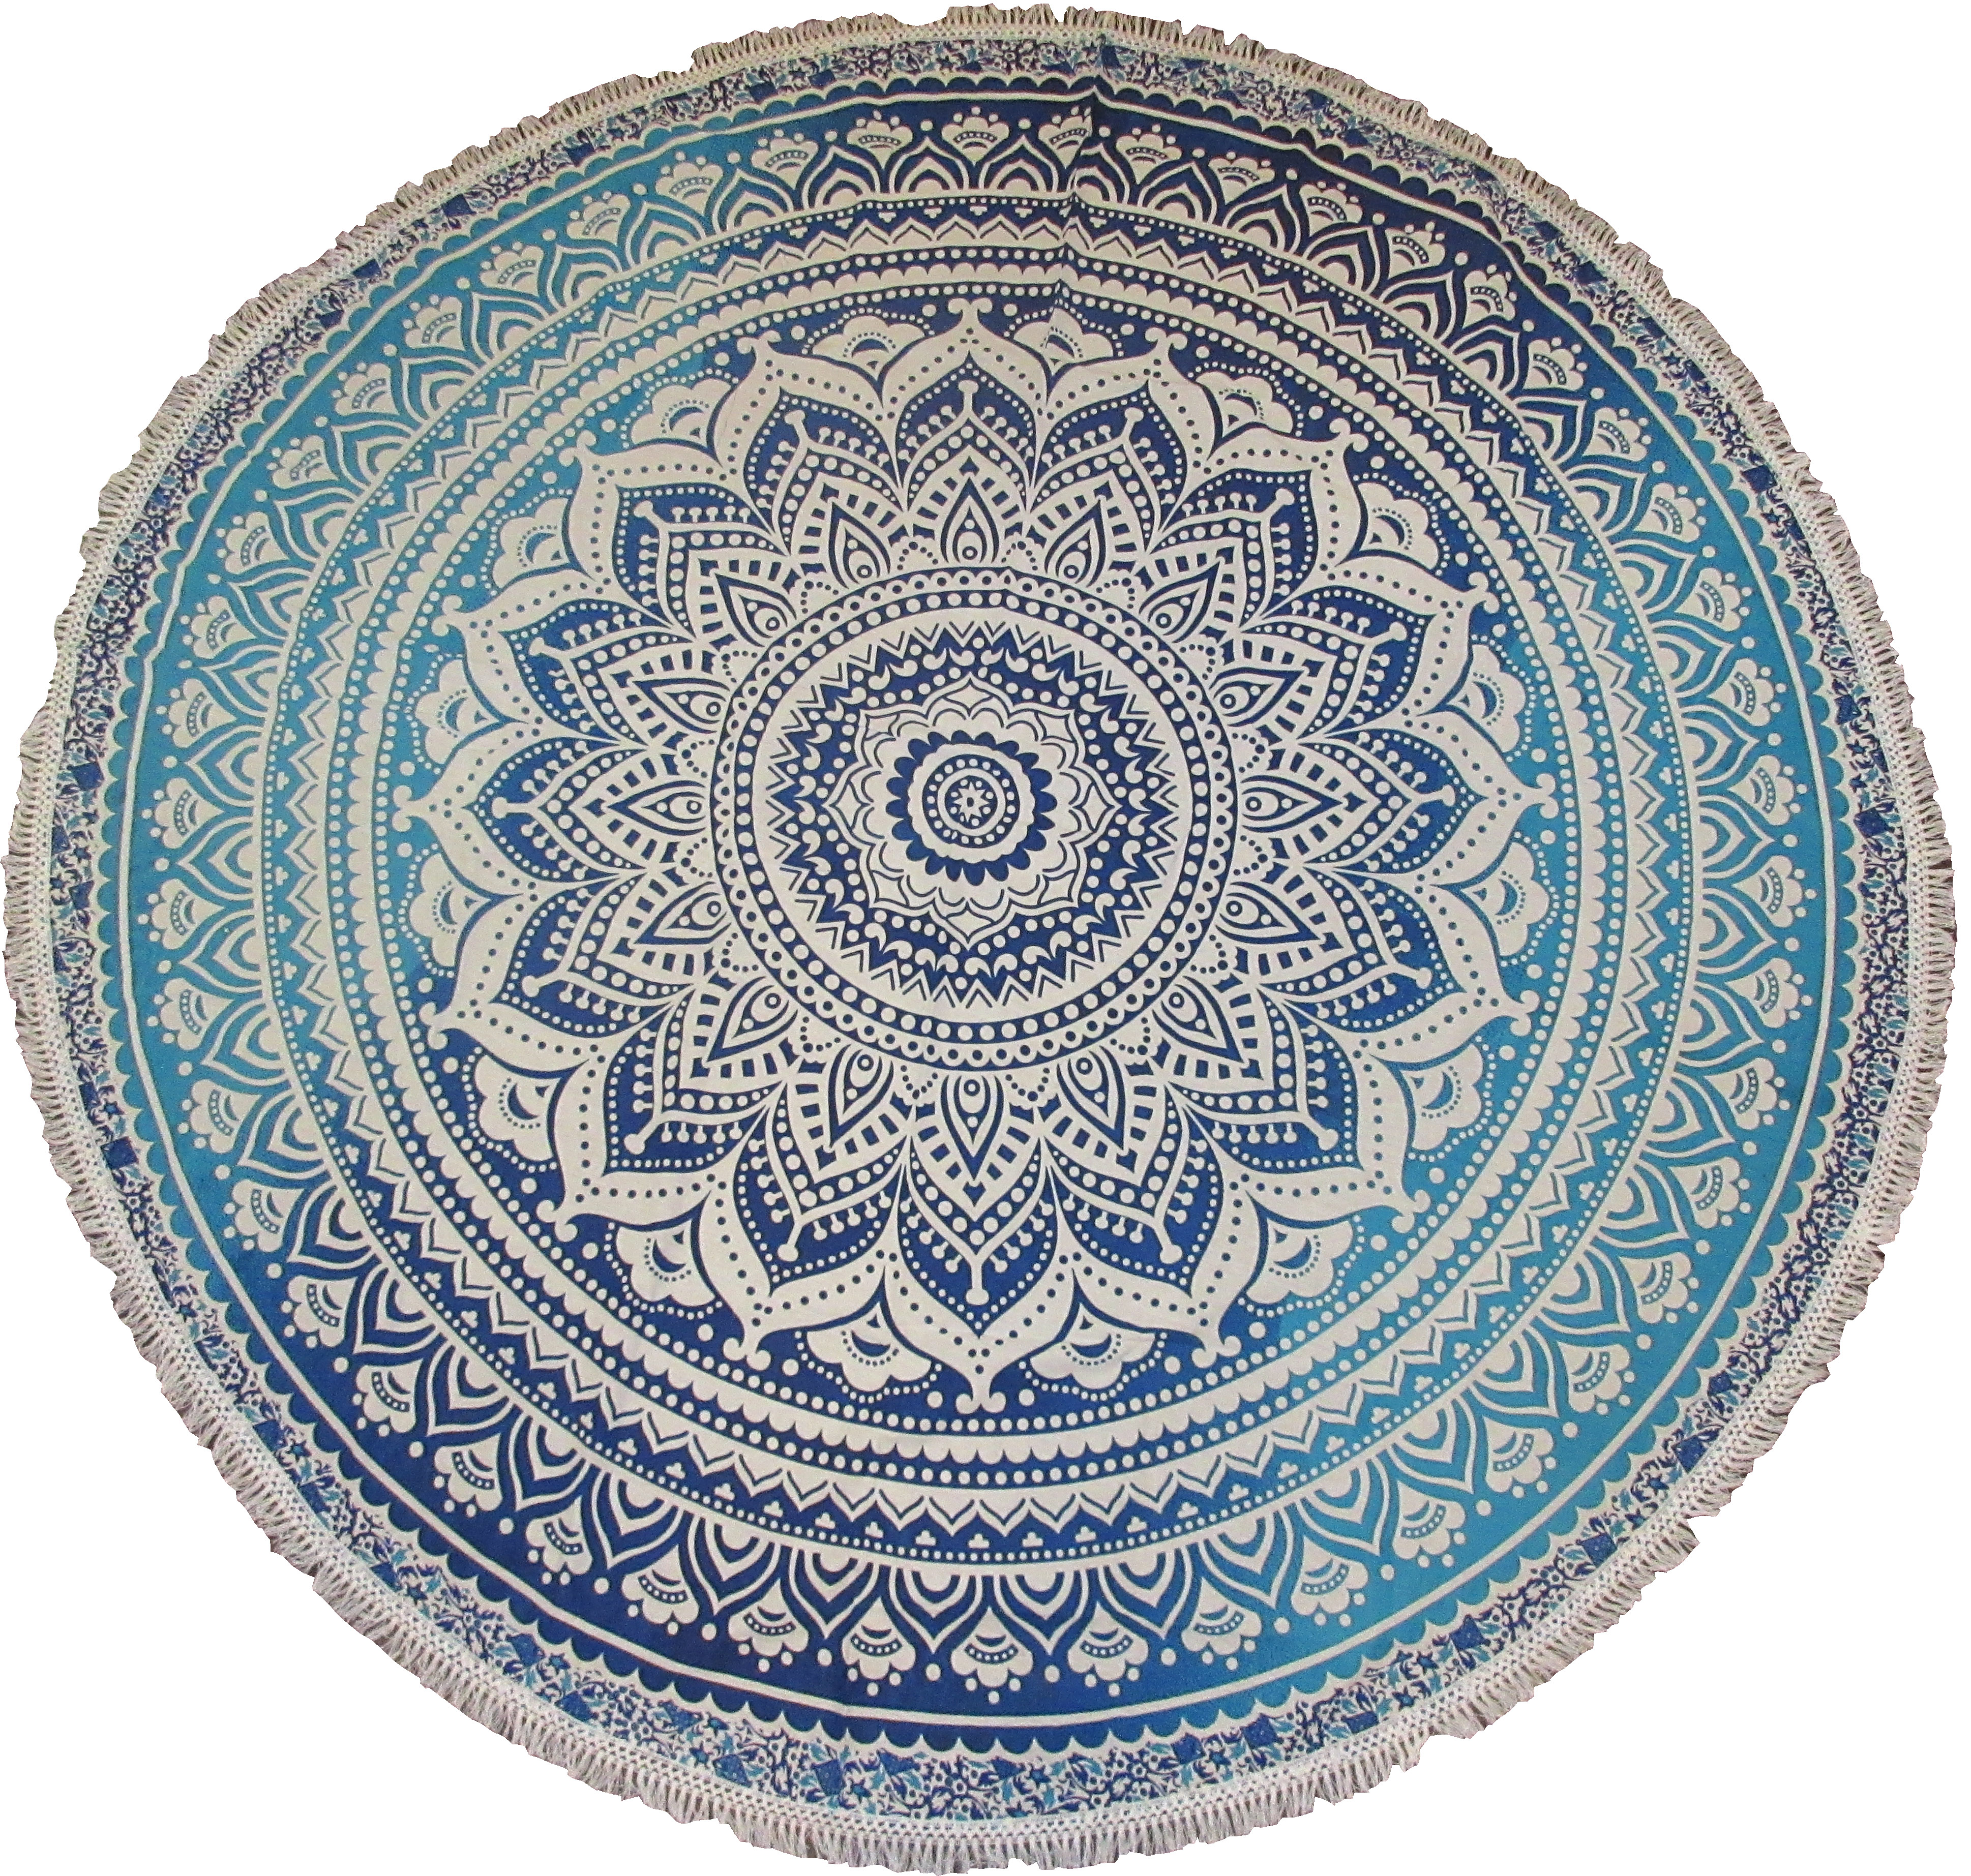 Mandala - Round Tapestry